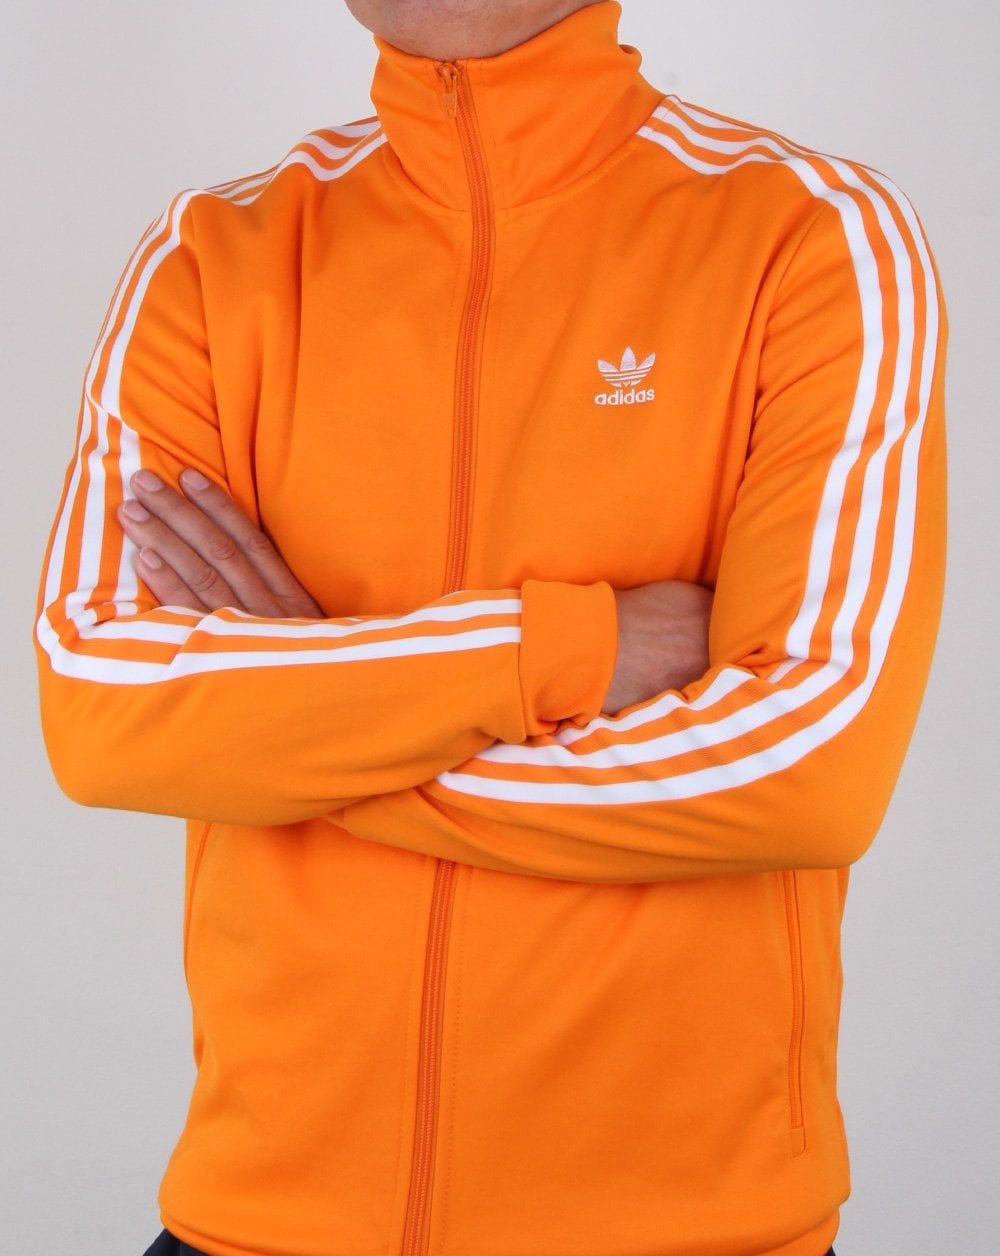 adidas-originals-beckenbauer-track-top-bright-orange-p11755-69939_image.jpg